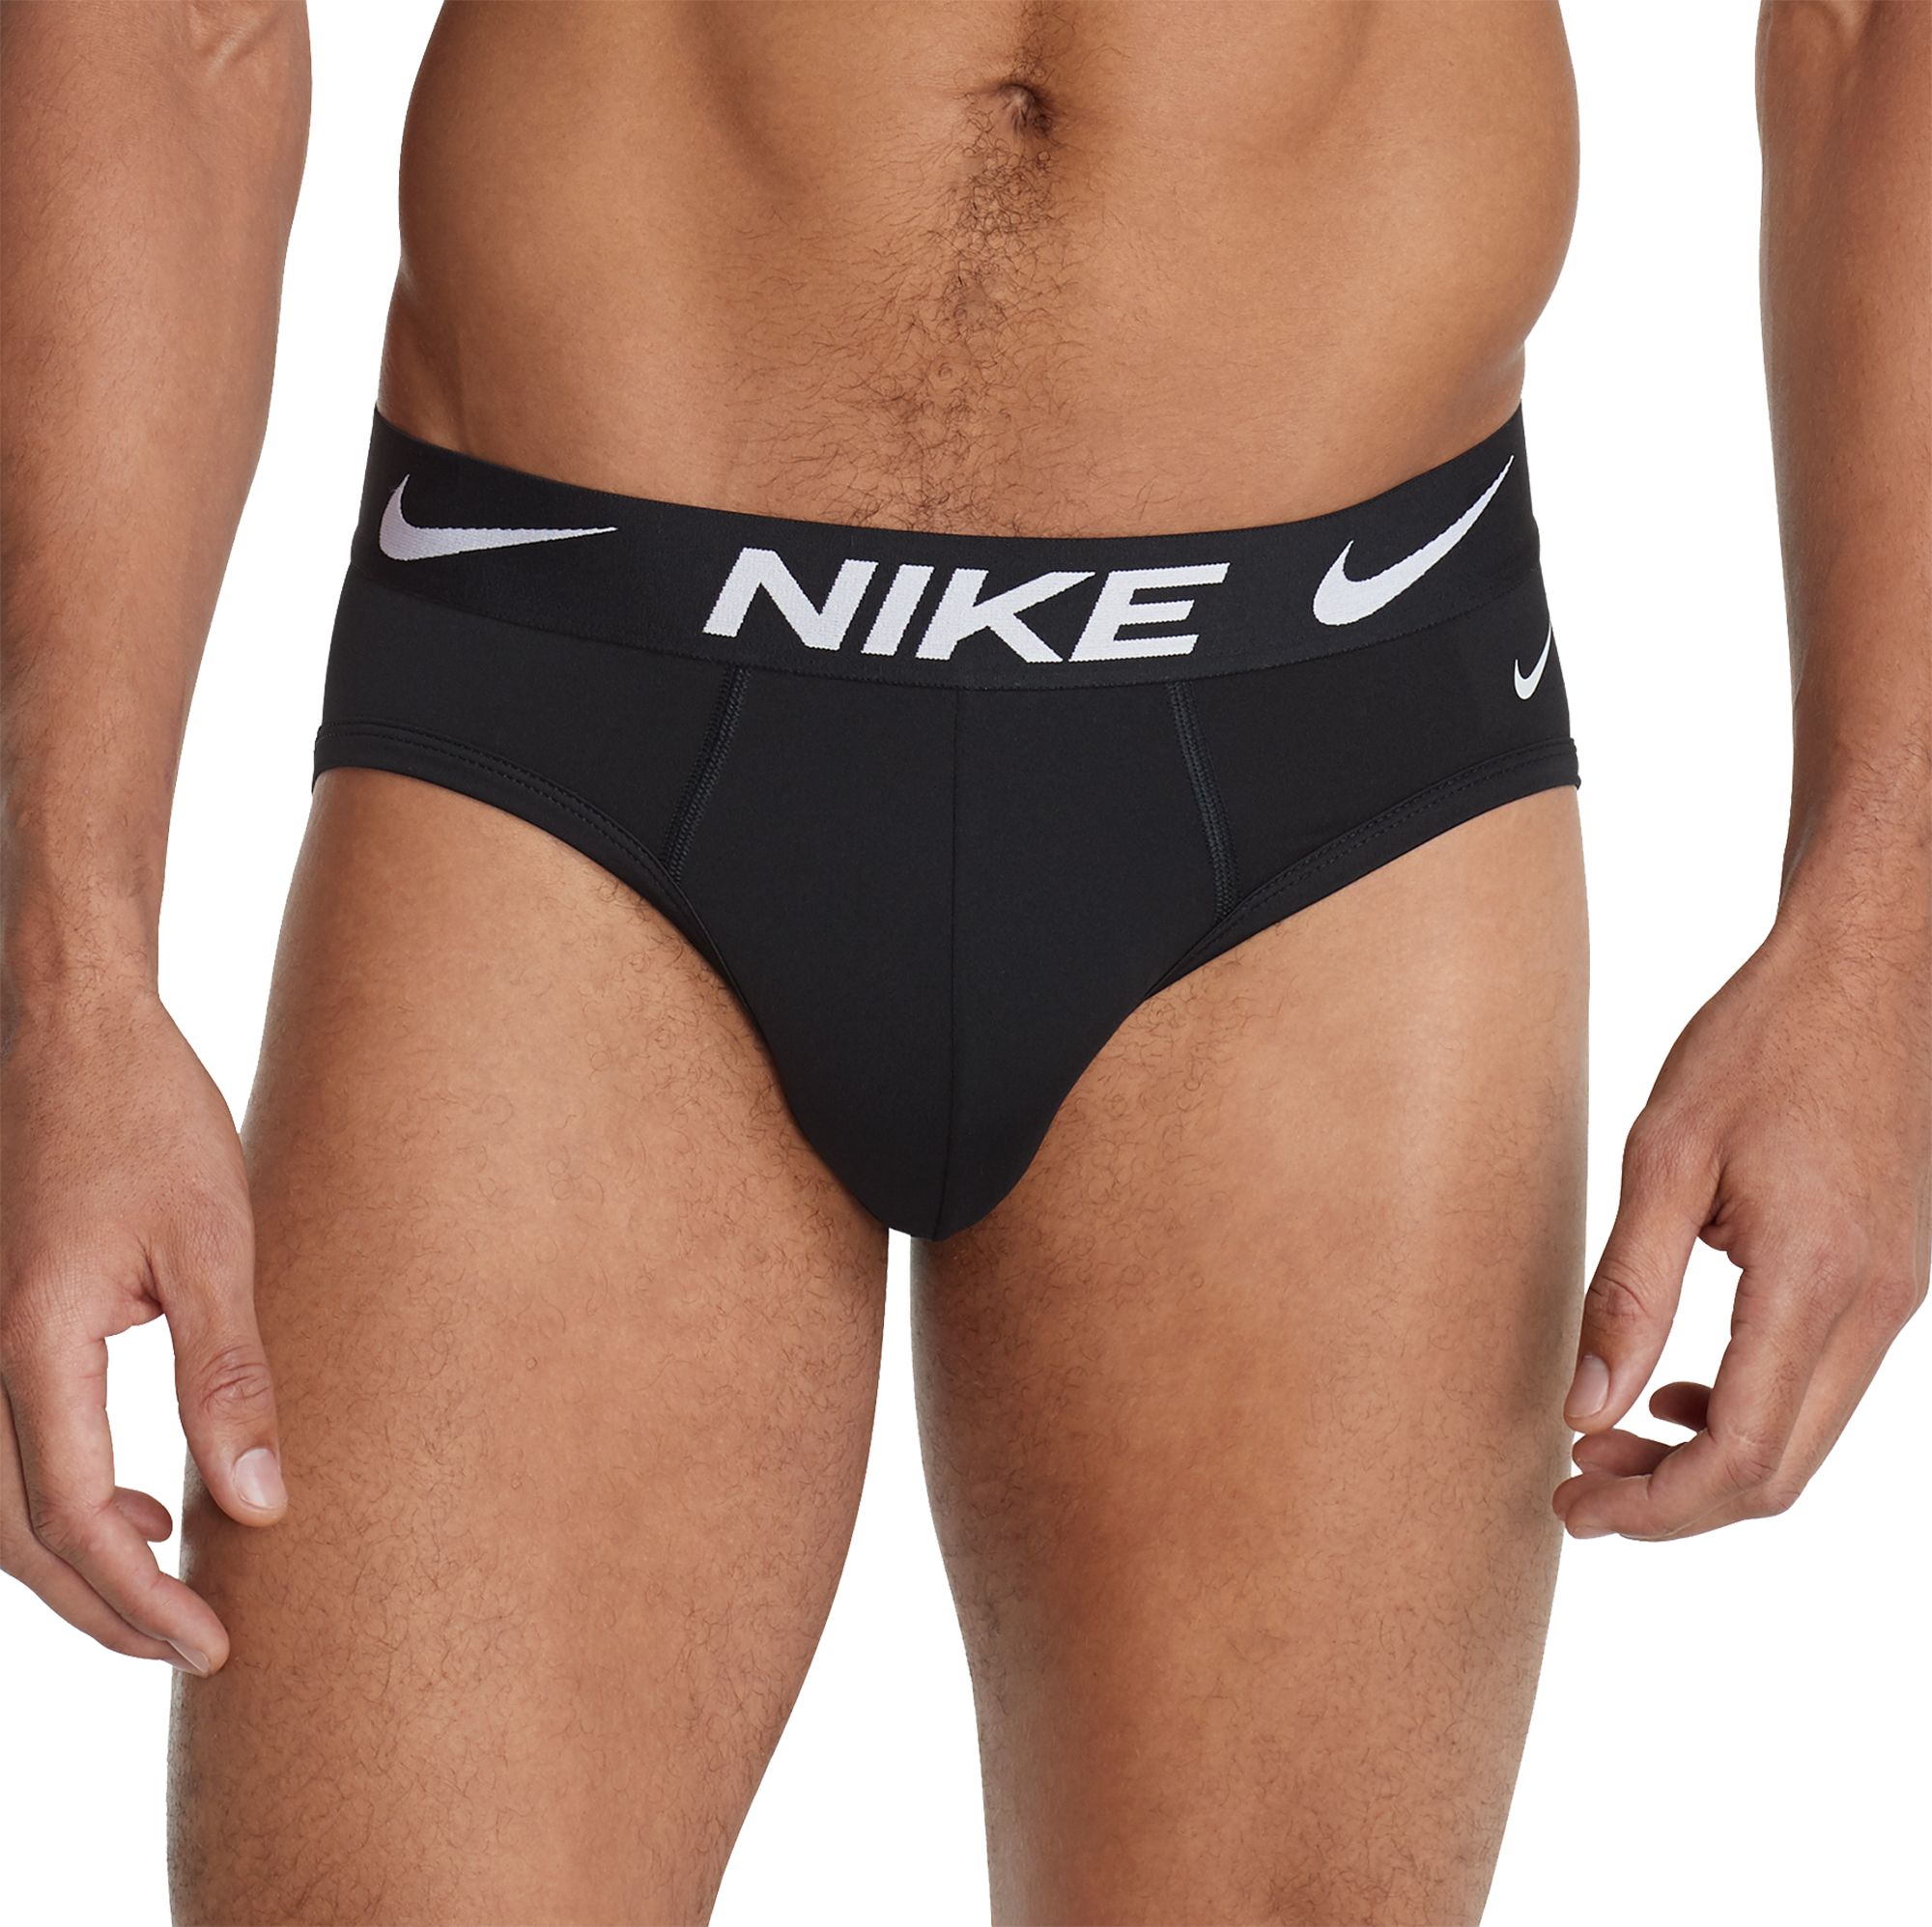 nike underwear sale